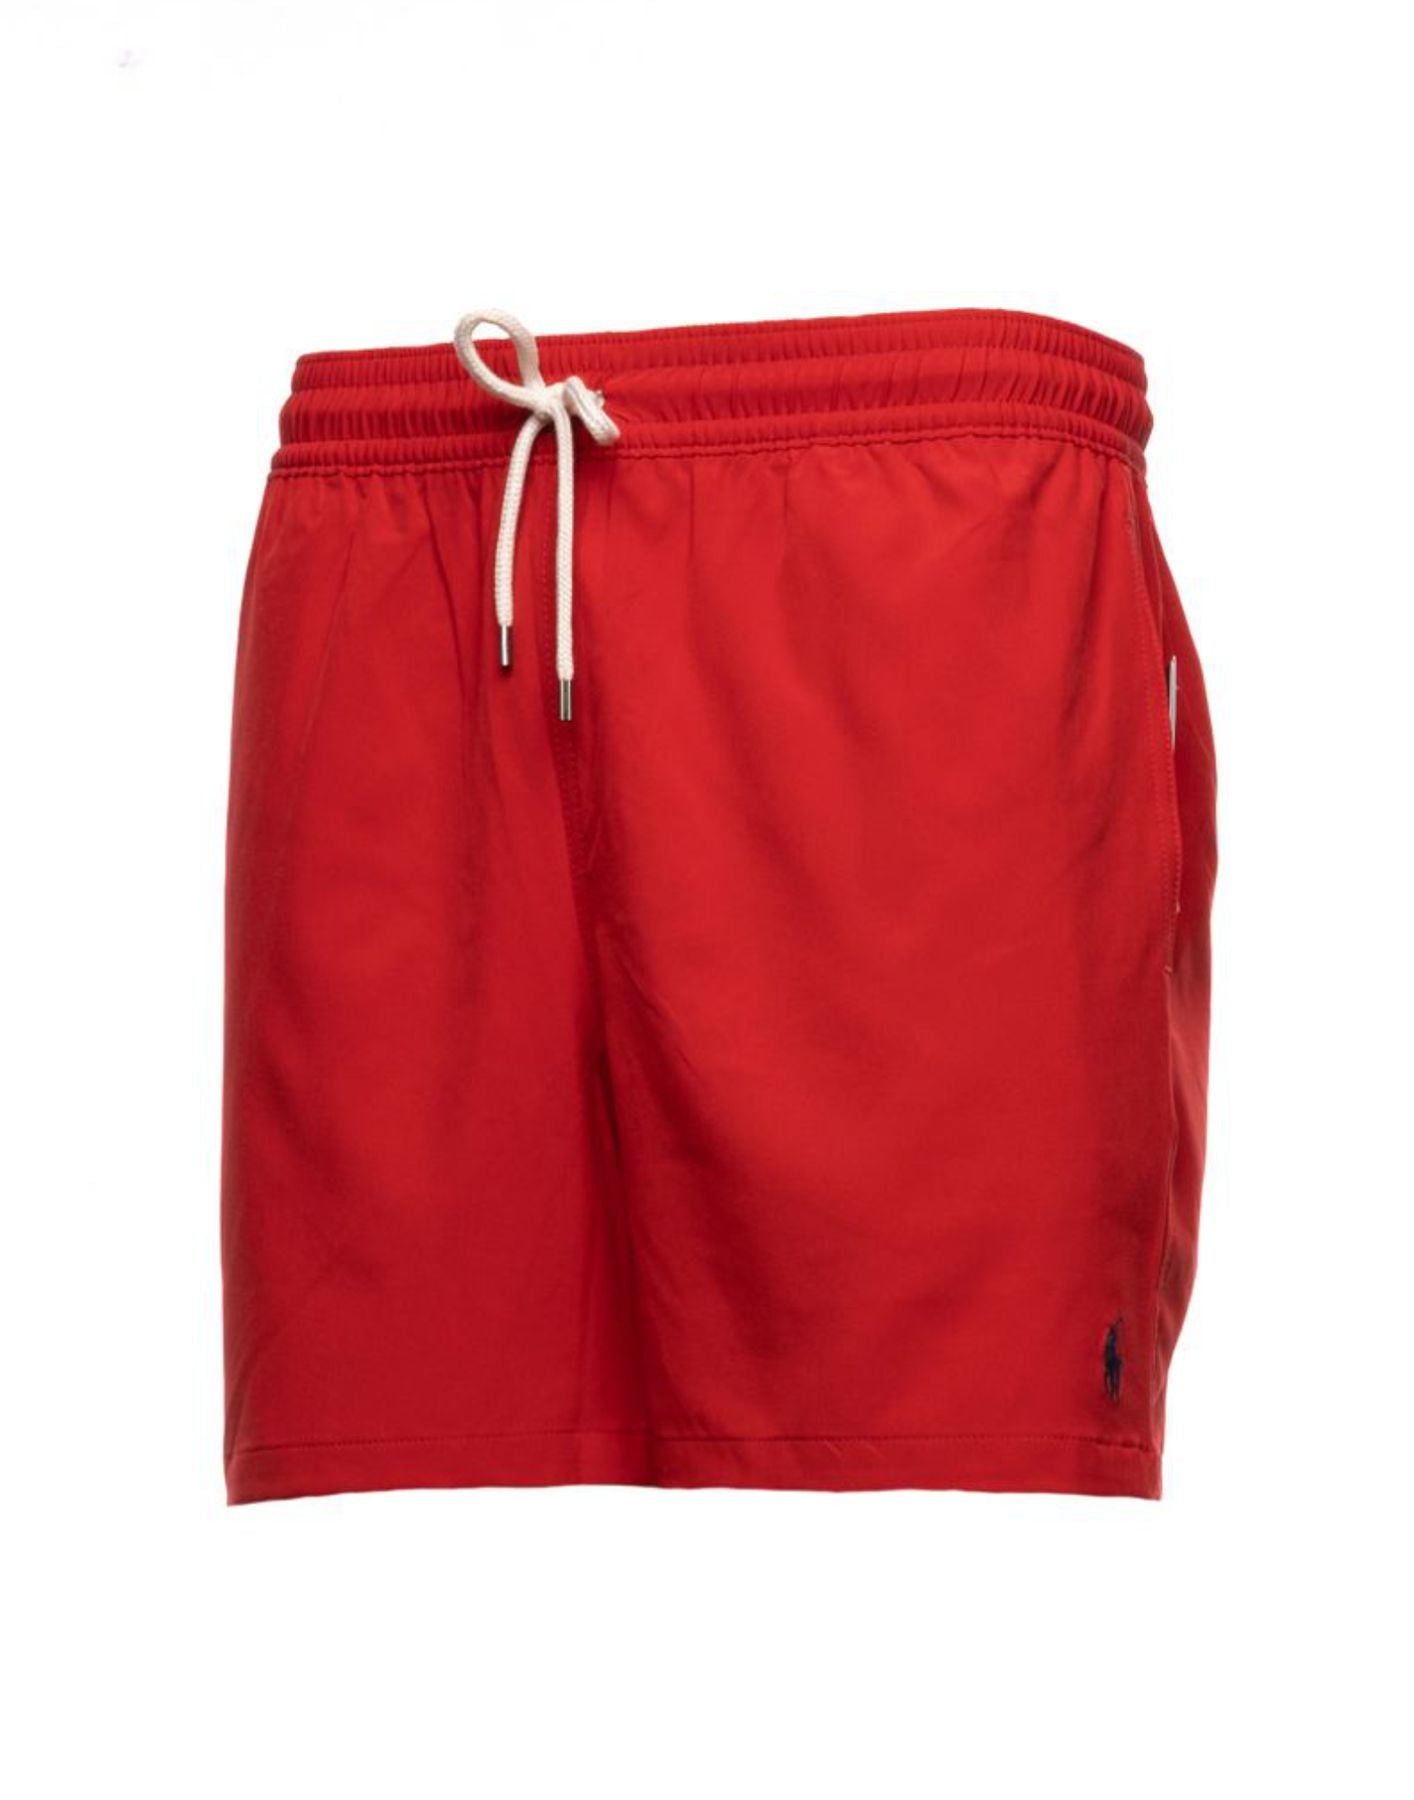 Swimsuit man 710907255005 RED Polo Ralph Lauren